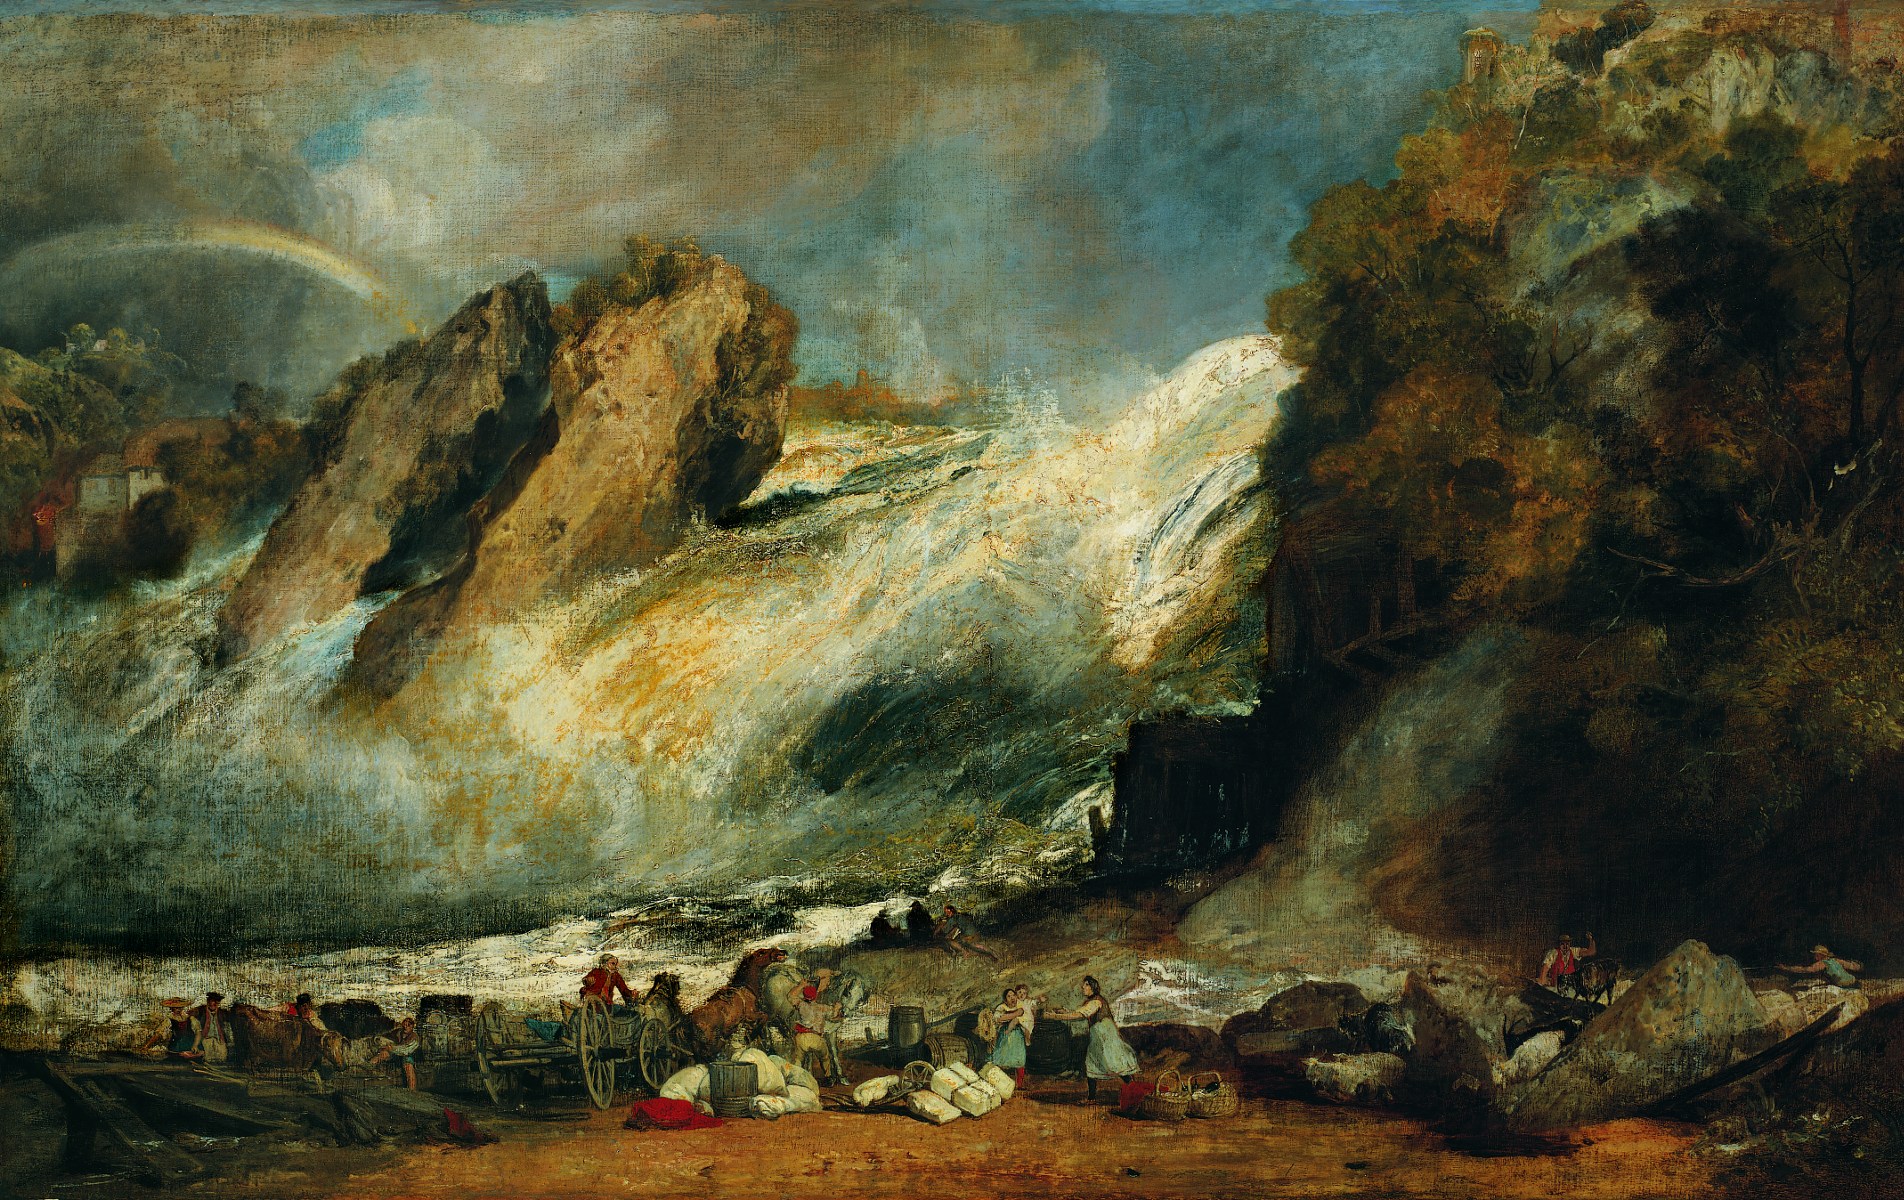 William Turner, Fall of the Rhine at Schaffhausen, 1806